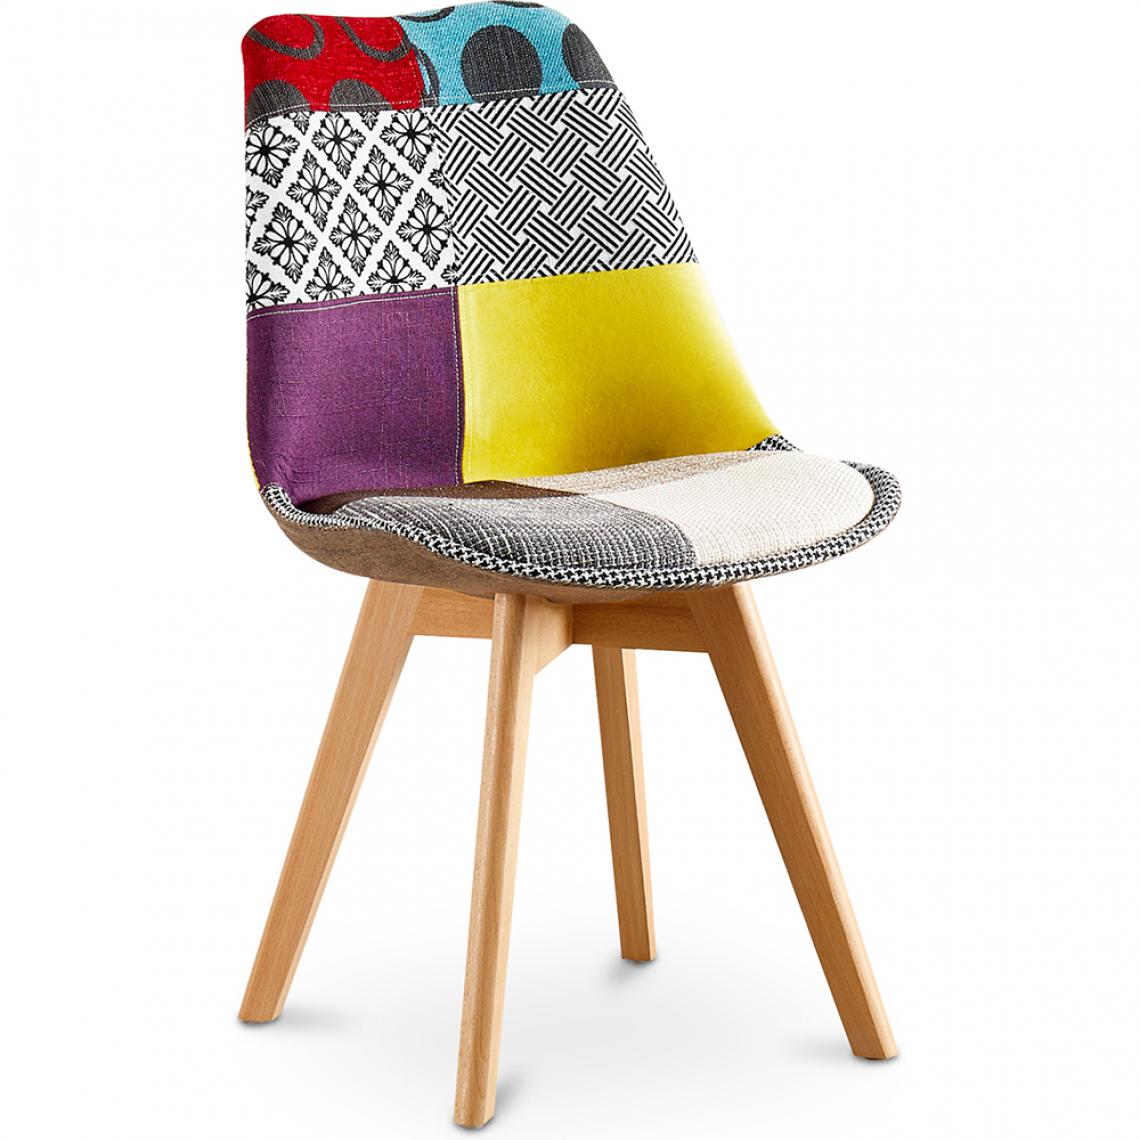 Iconik Interior - Chaise à manger Deswick design scandi rétro - multicolore premium - patchwork Ray - Chaises